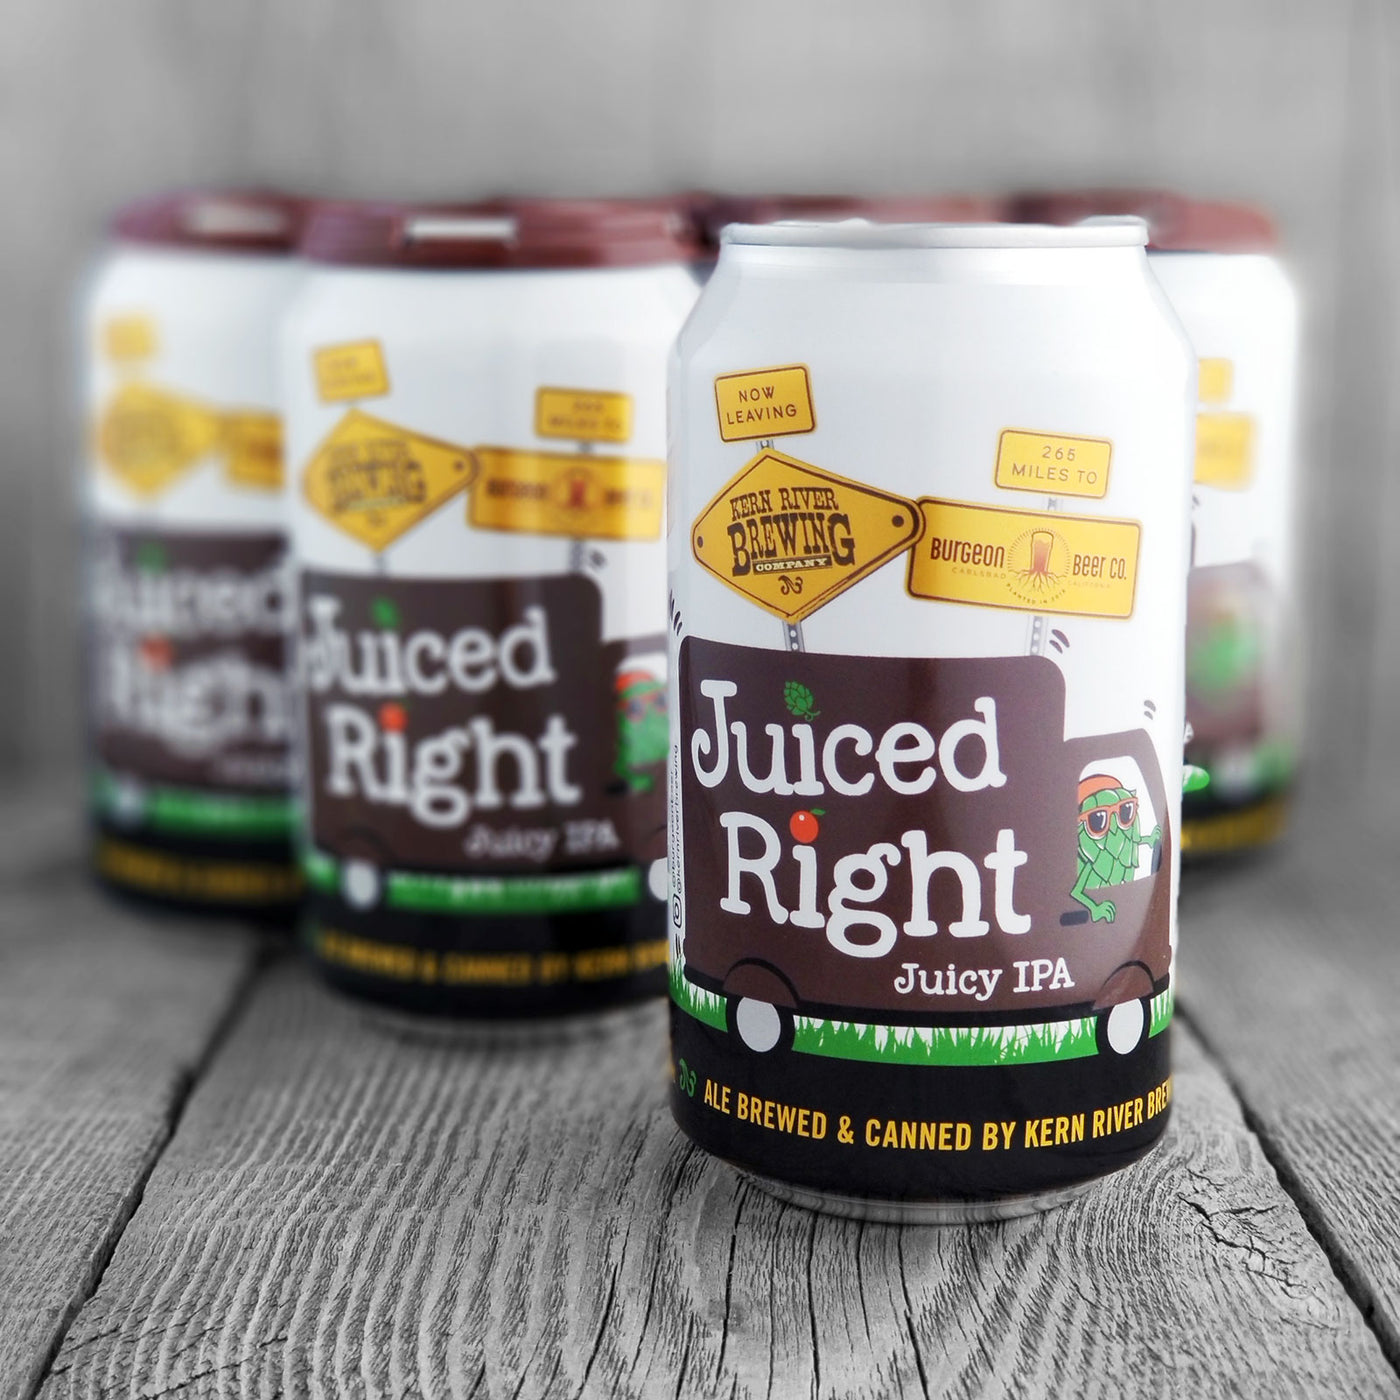 Kern River / Burgeon Beer - Juiced Right